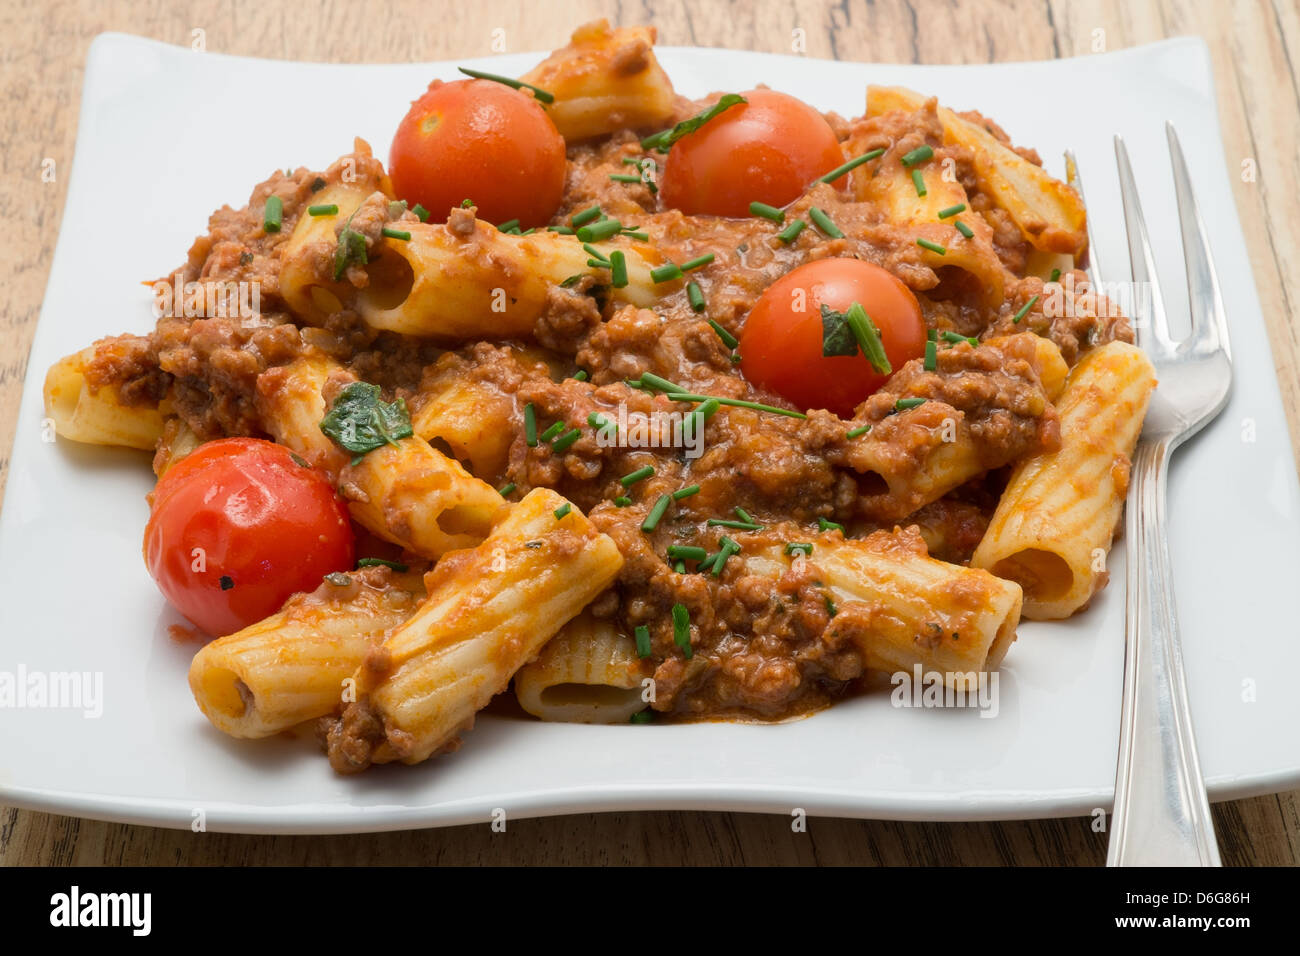 Plate of beef ragu with rigatoni pasta - studio shot Stock Photo